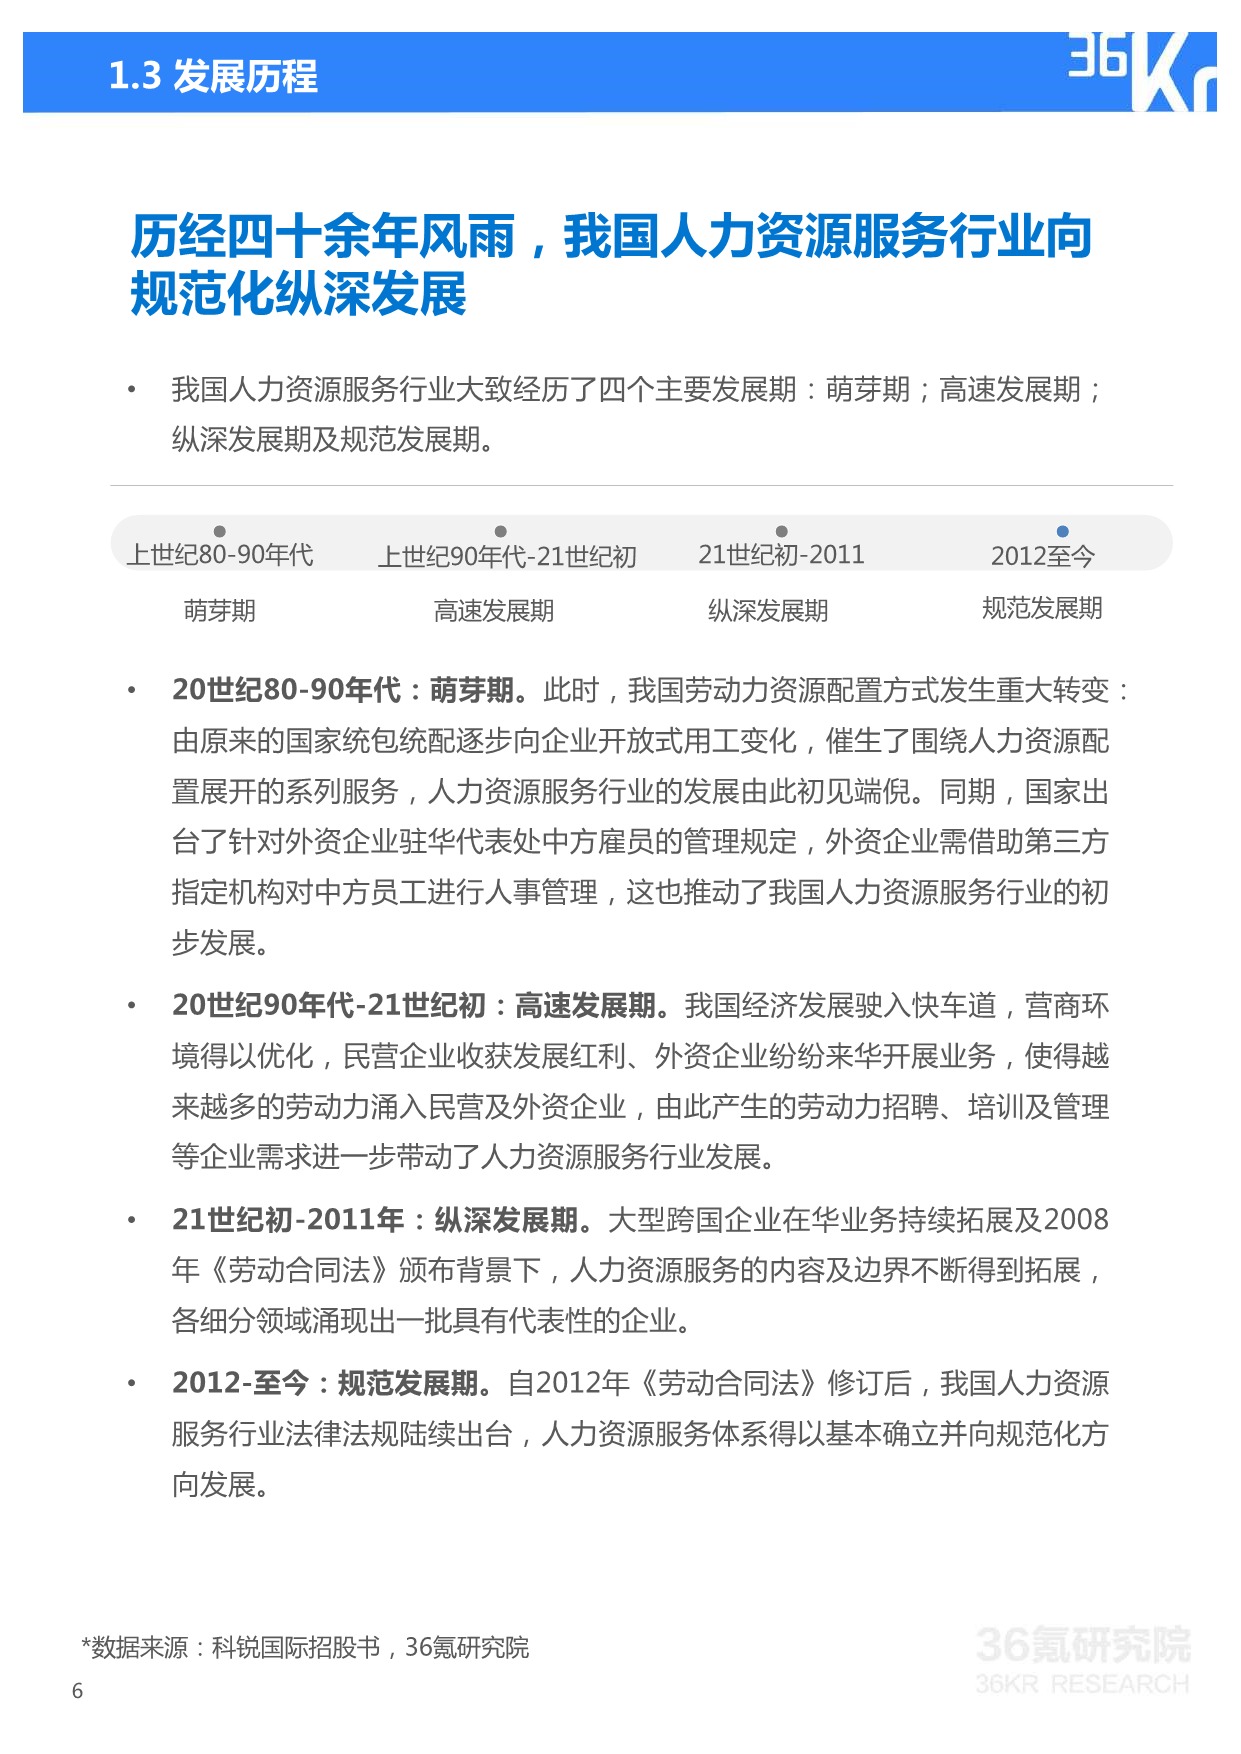 36Kr-2021年中国人力资源服务行业研究报告_6.jpeg